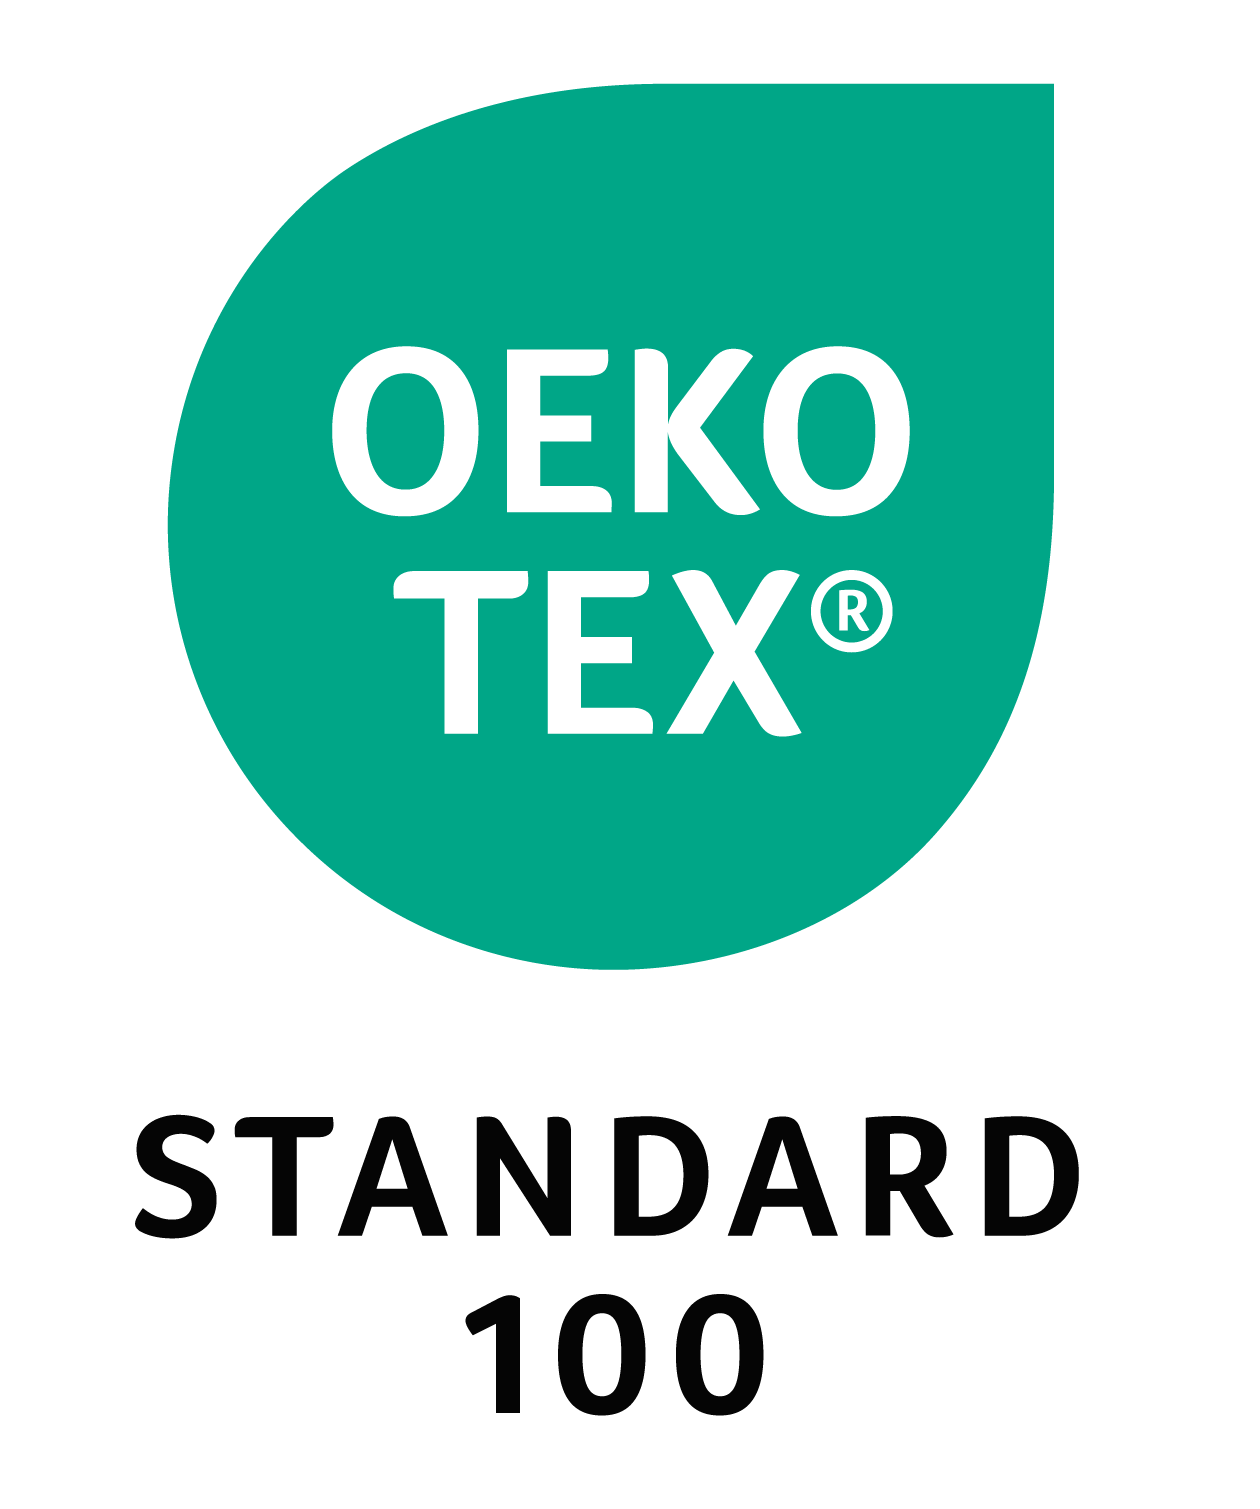 Oekotex Standard 100